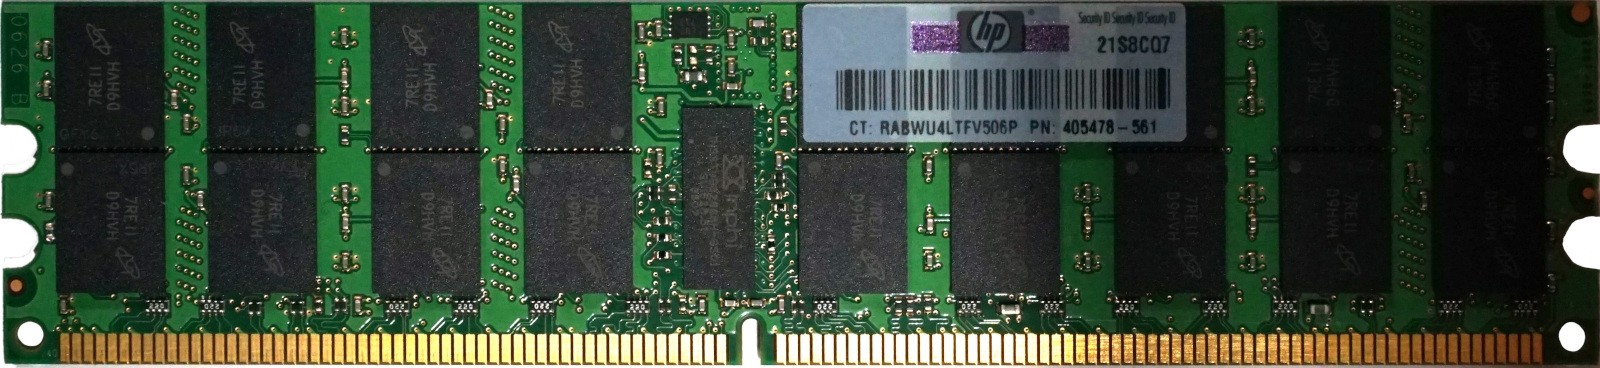 HP (405478-561) - 8GB PC2-4200P (DDR2-533Mhz, 4RX4)